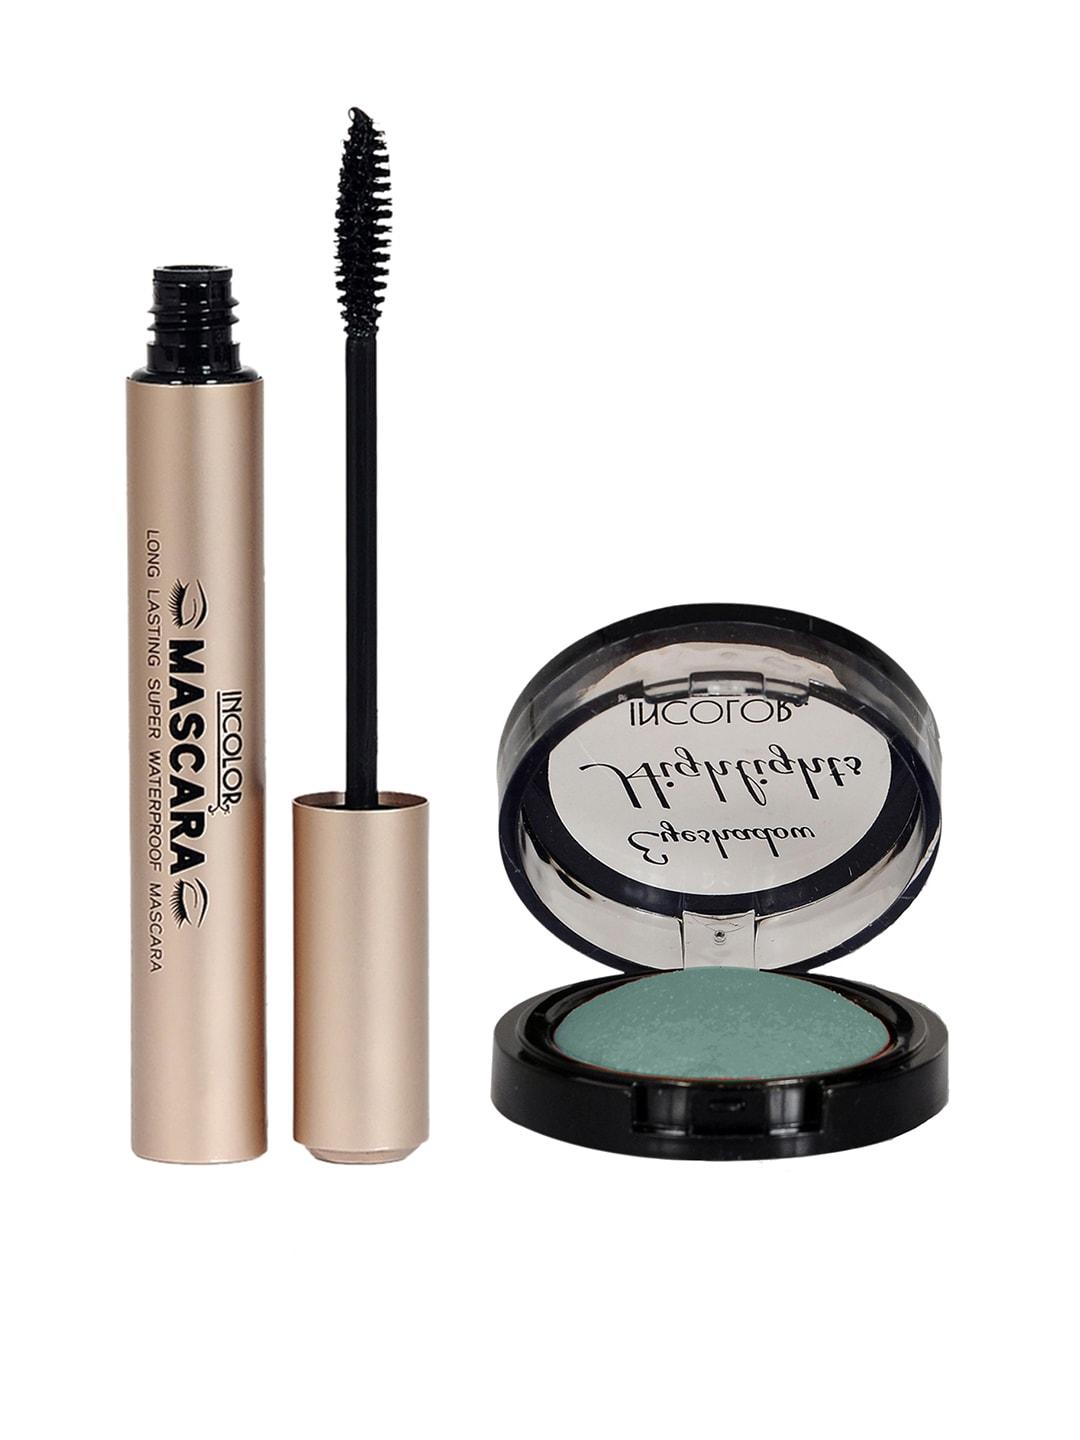 incolor-set-of-black-dense-super-waterproof-mascara-&-teal-green-highlight-eyeshadow-07